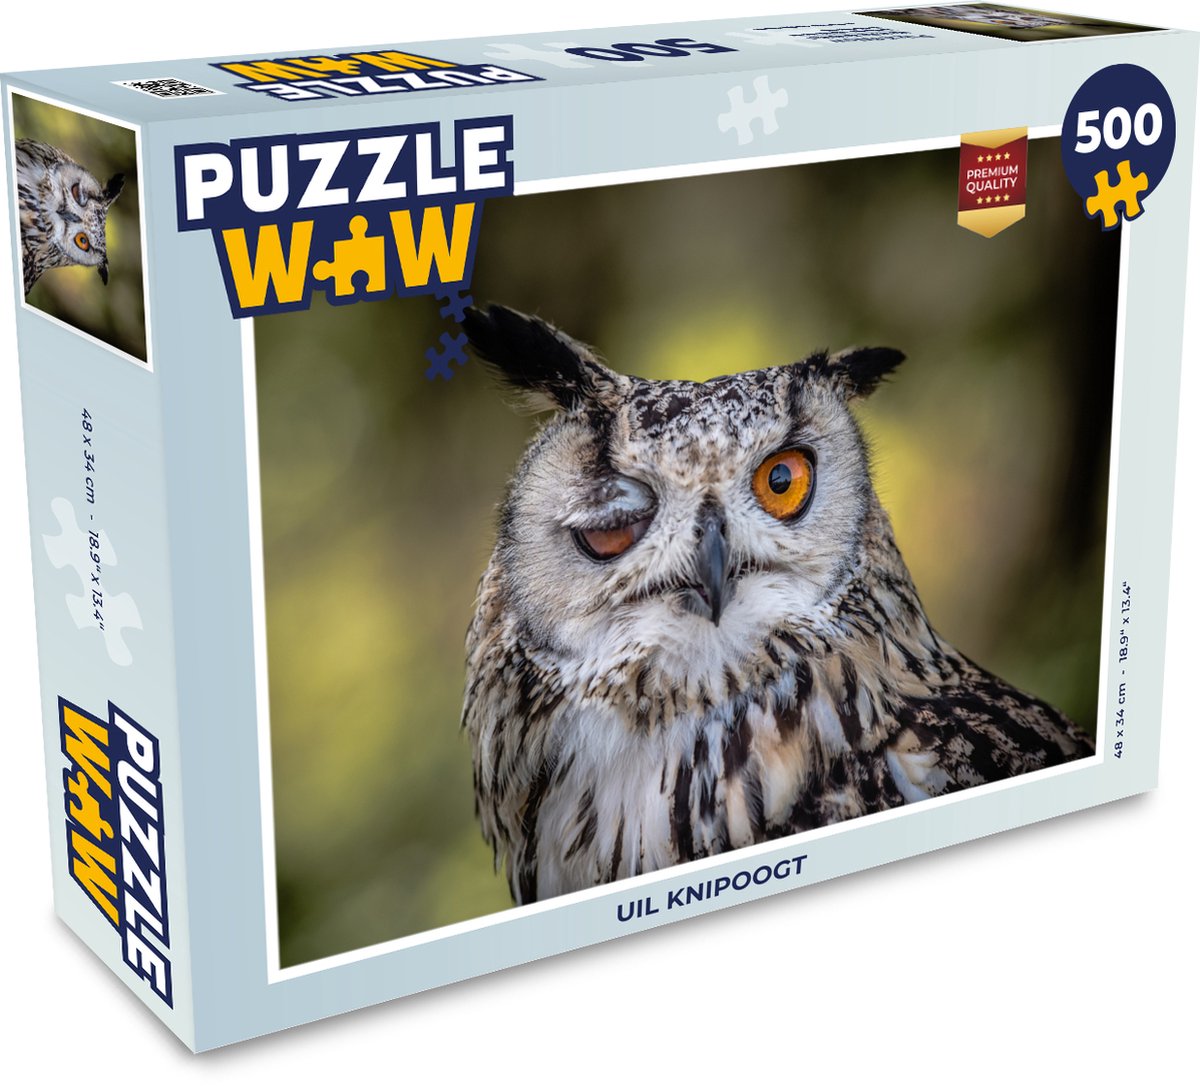 Puzzel 500 stukjes Vrije Dieren - Uil knipoogt - PuzzleWow heeft +100000  puzzels | bol.com